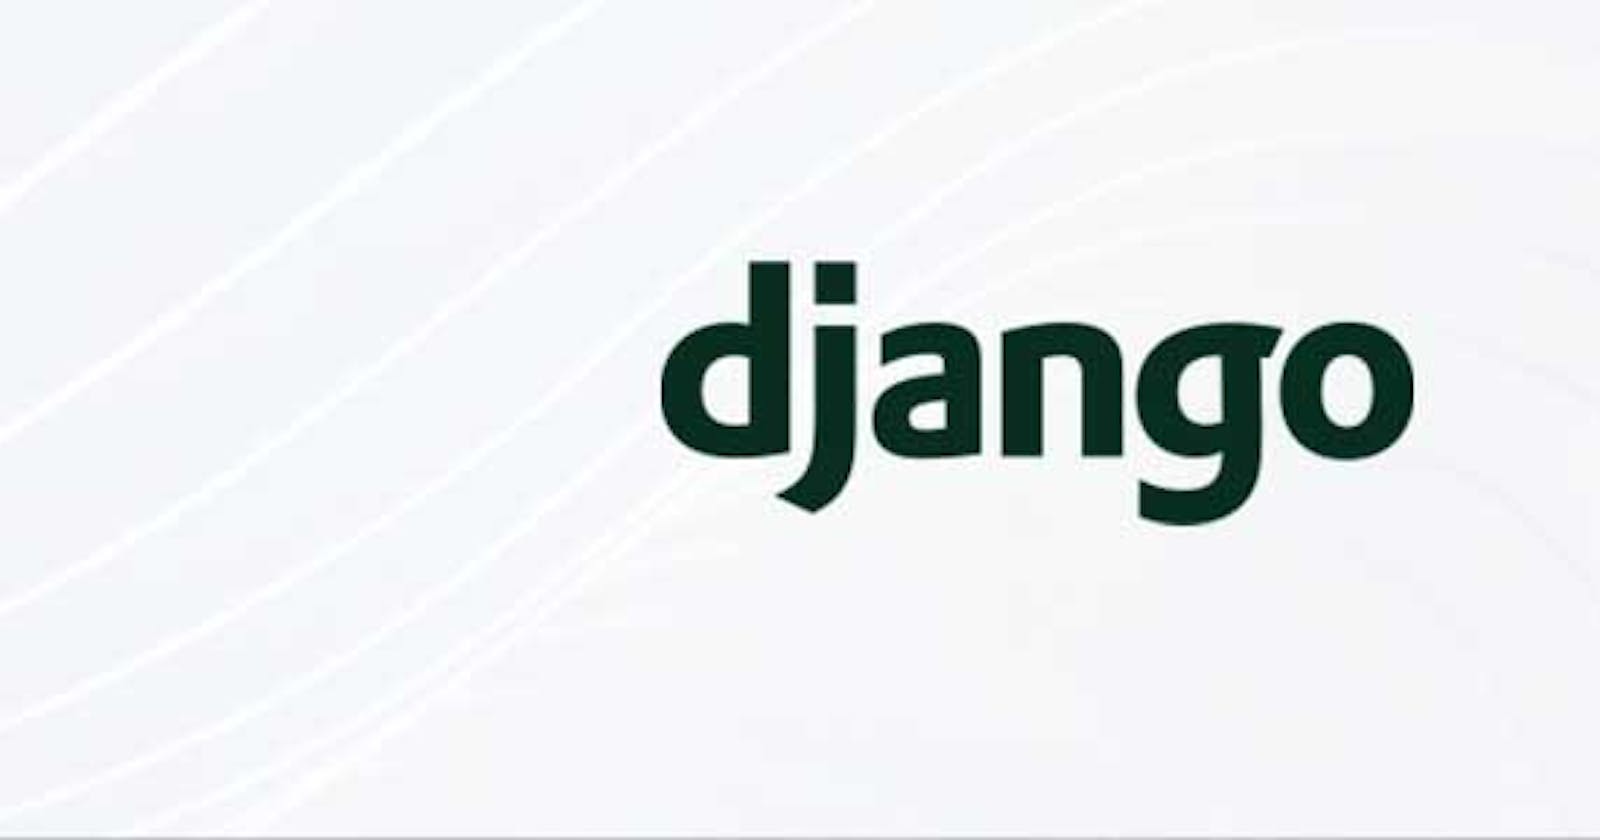 Django v4 Release Summary - Free Samples Included